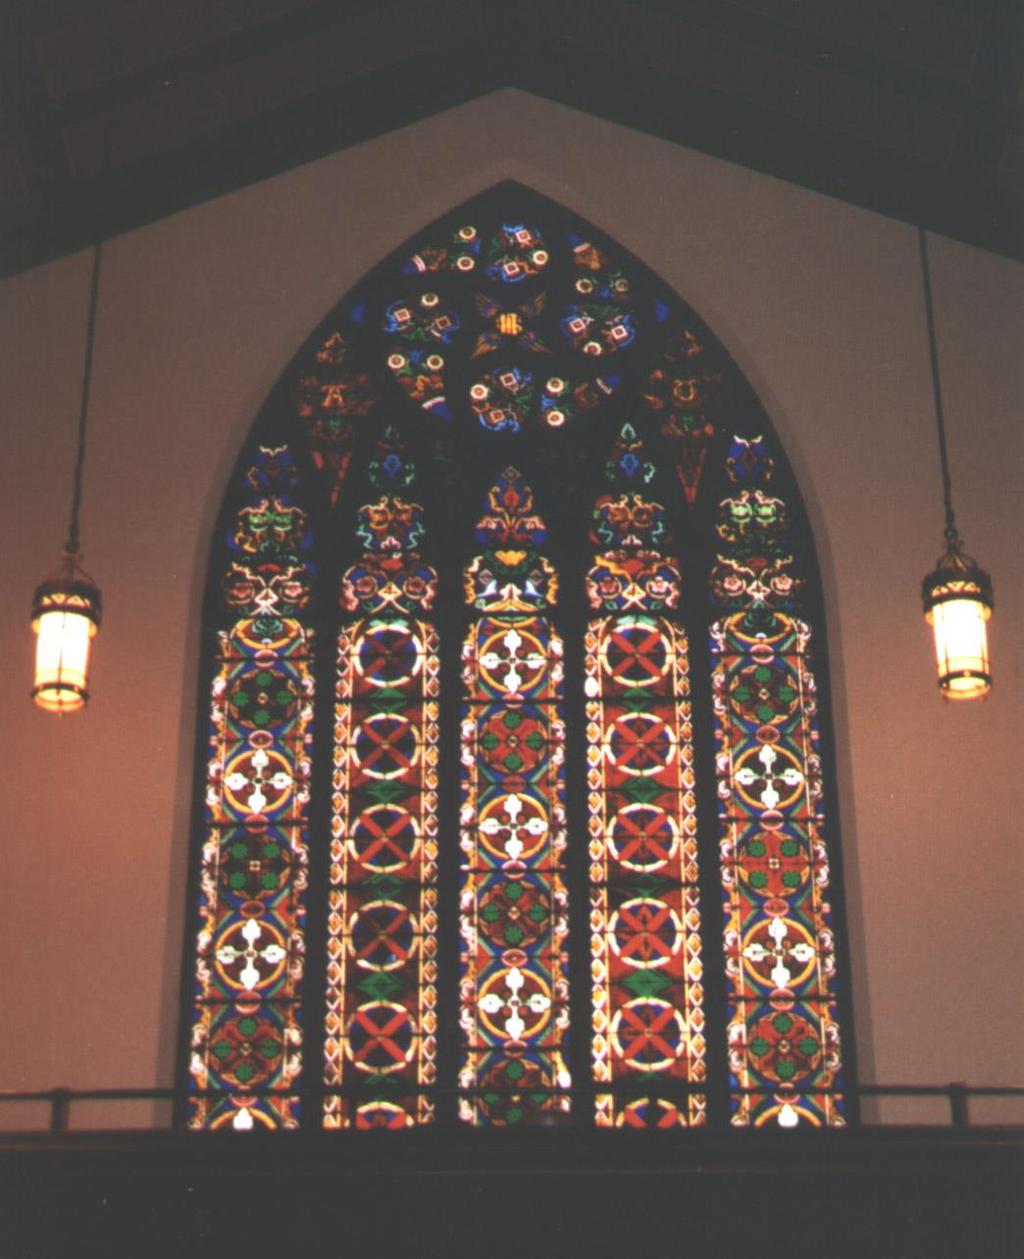 The façade window tracery is original to the Thomas Dixon design.